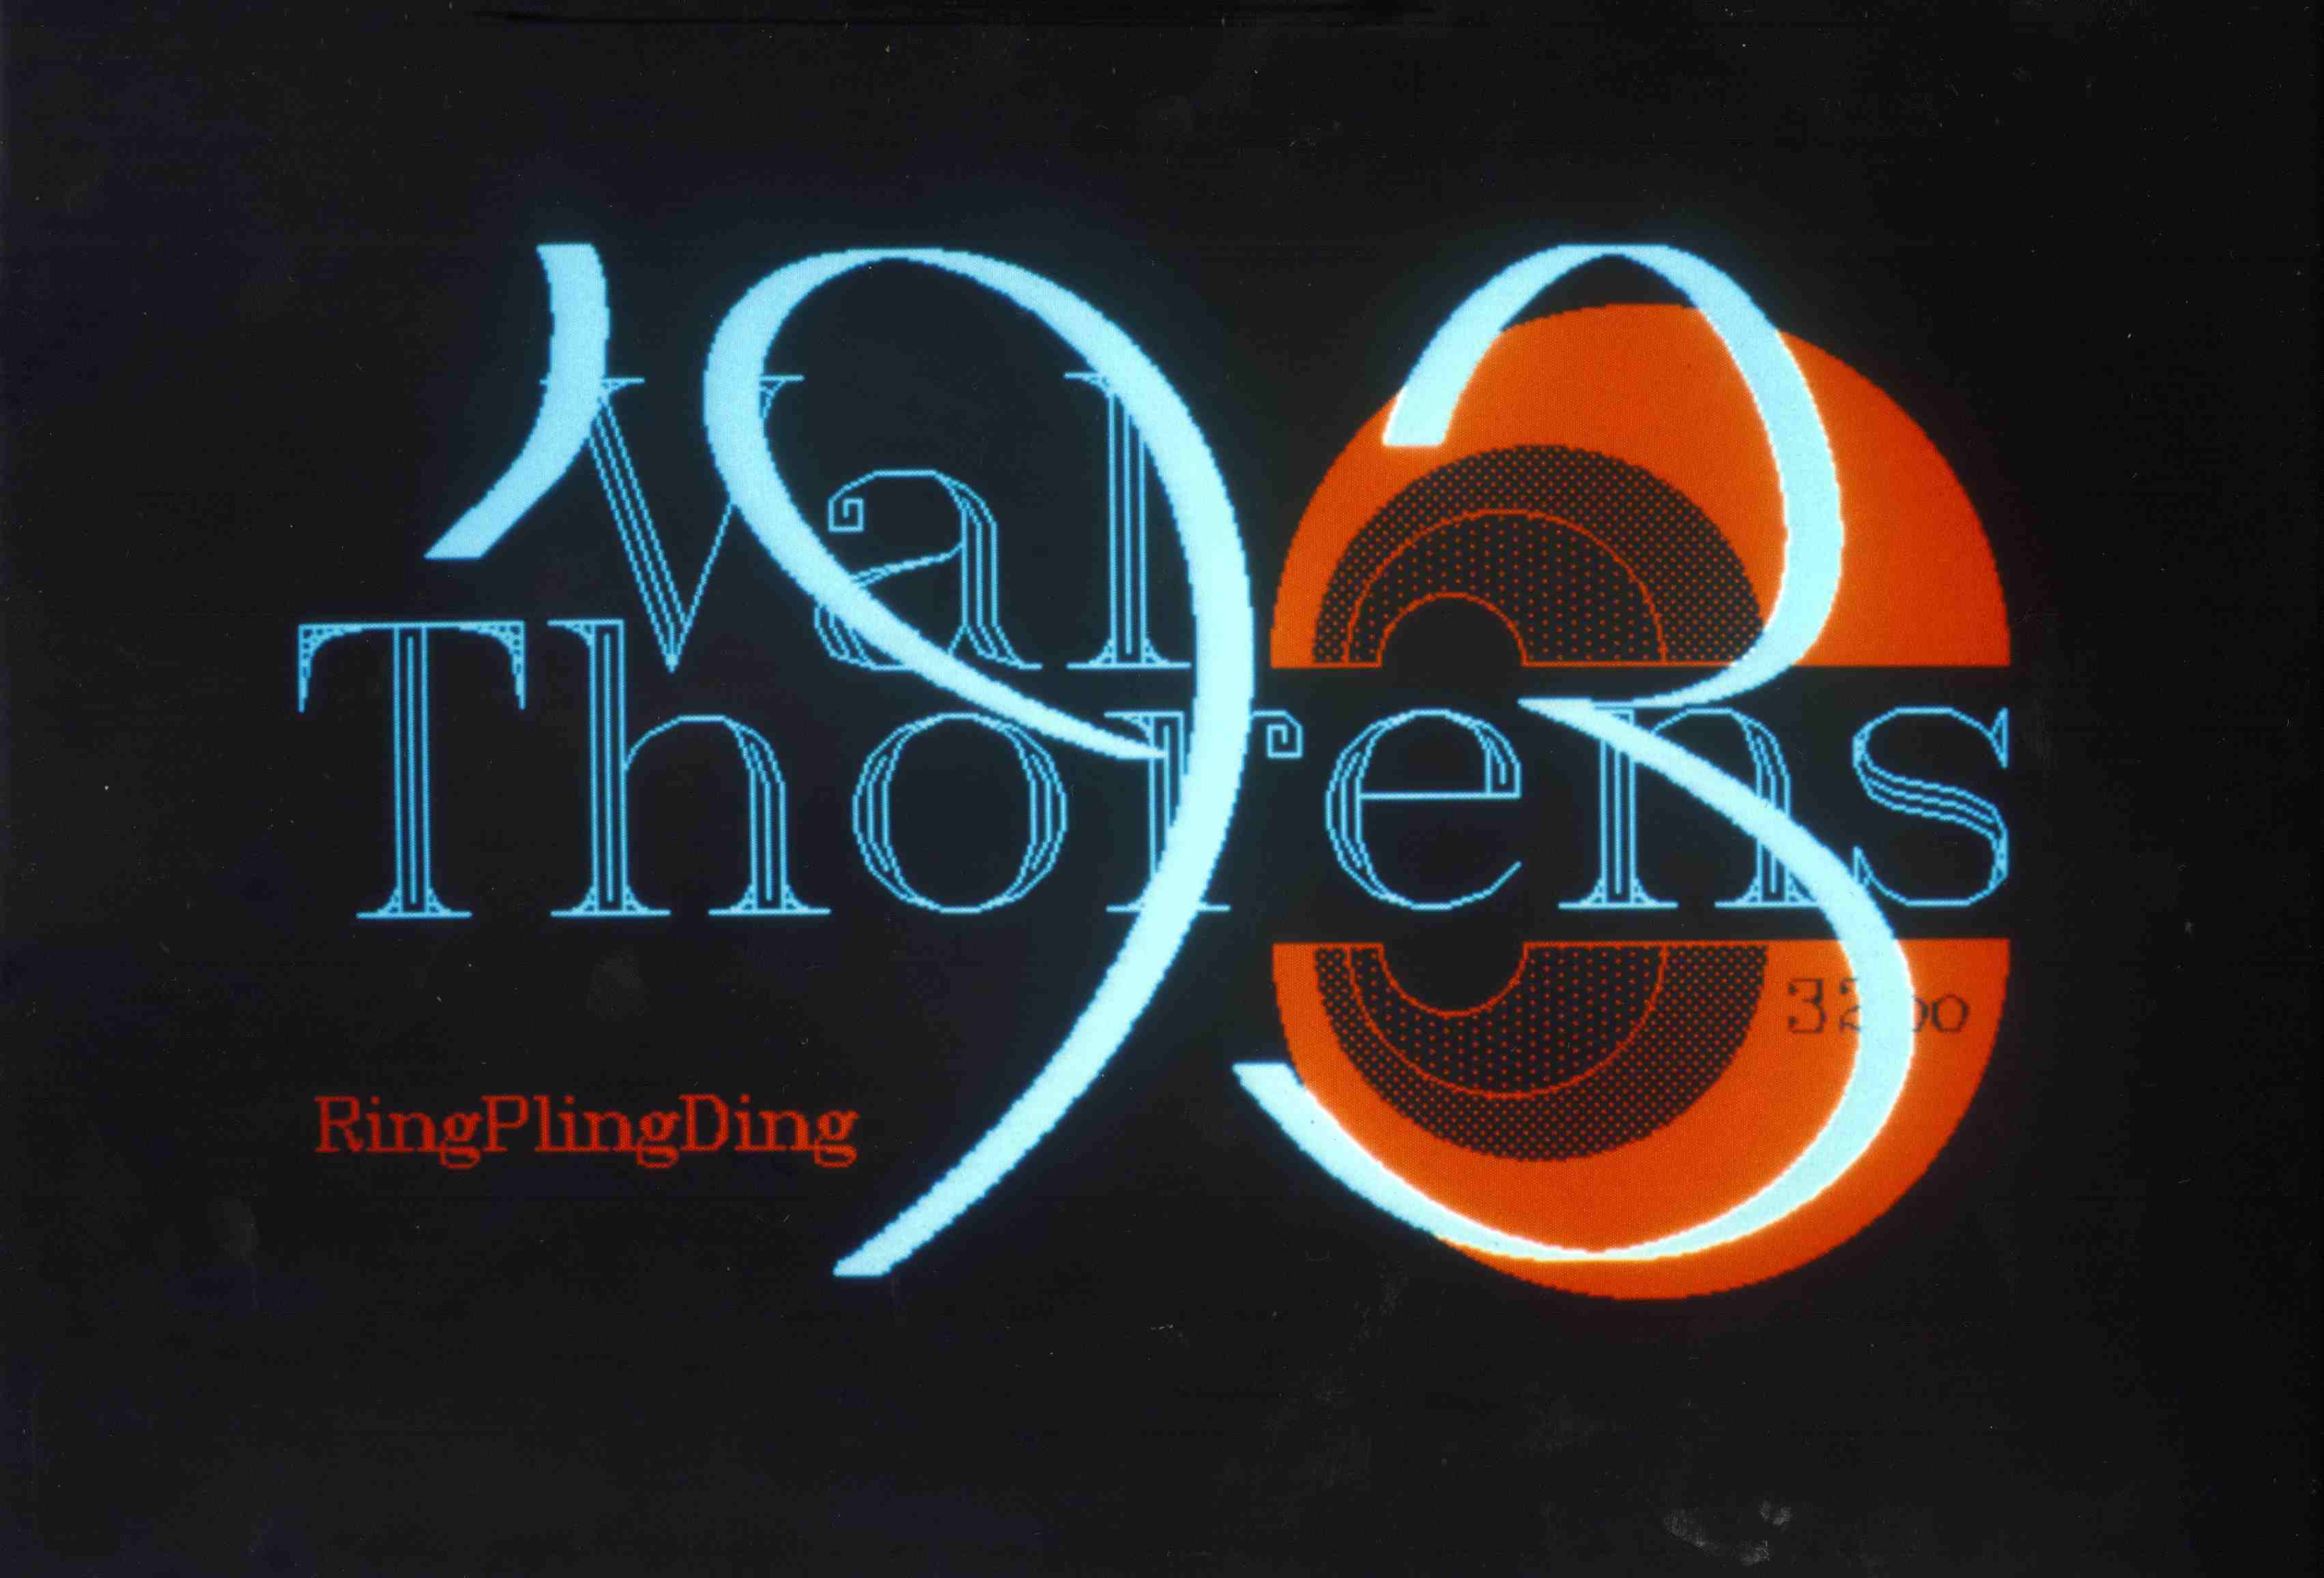 Val Thorens 1993